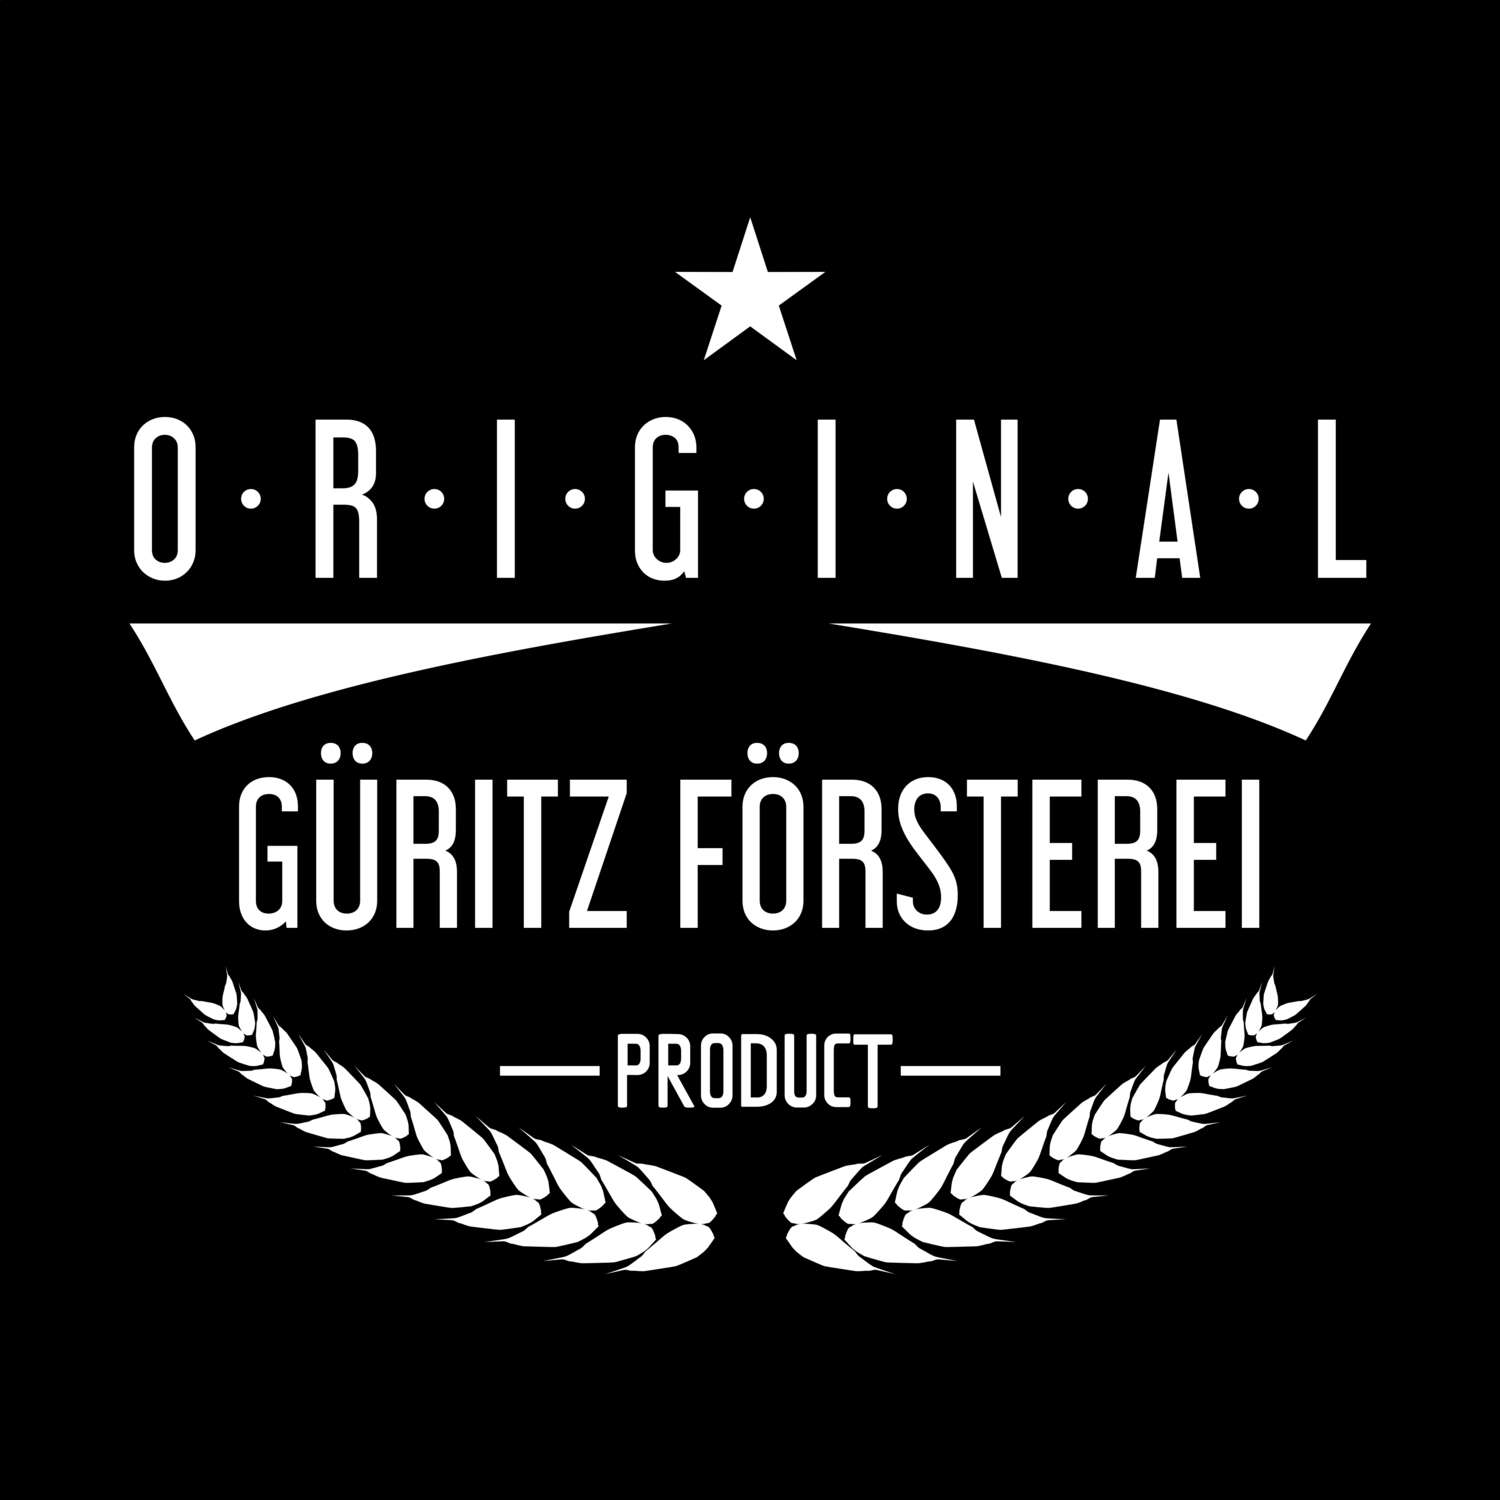 Güritz Försterei T-Shirt »Original Product«